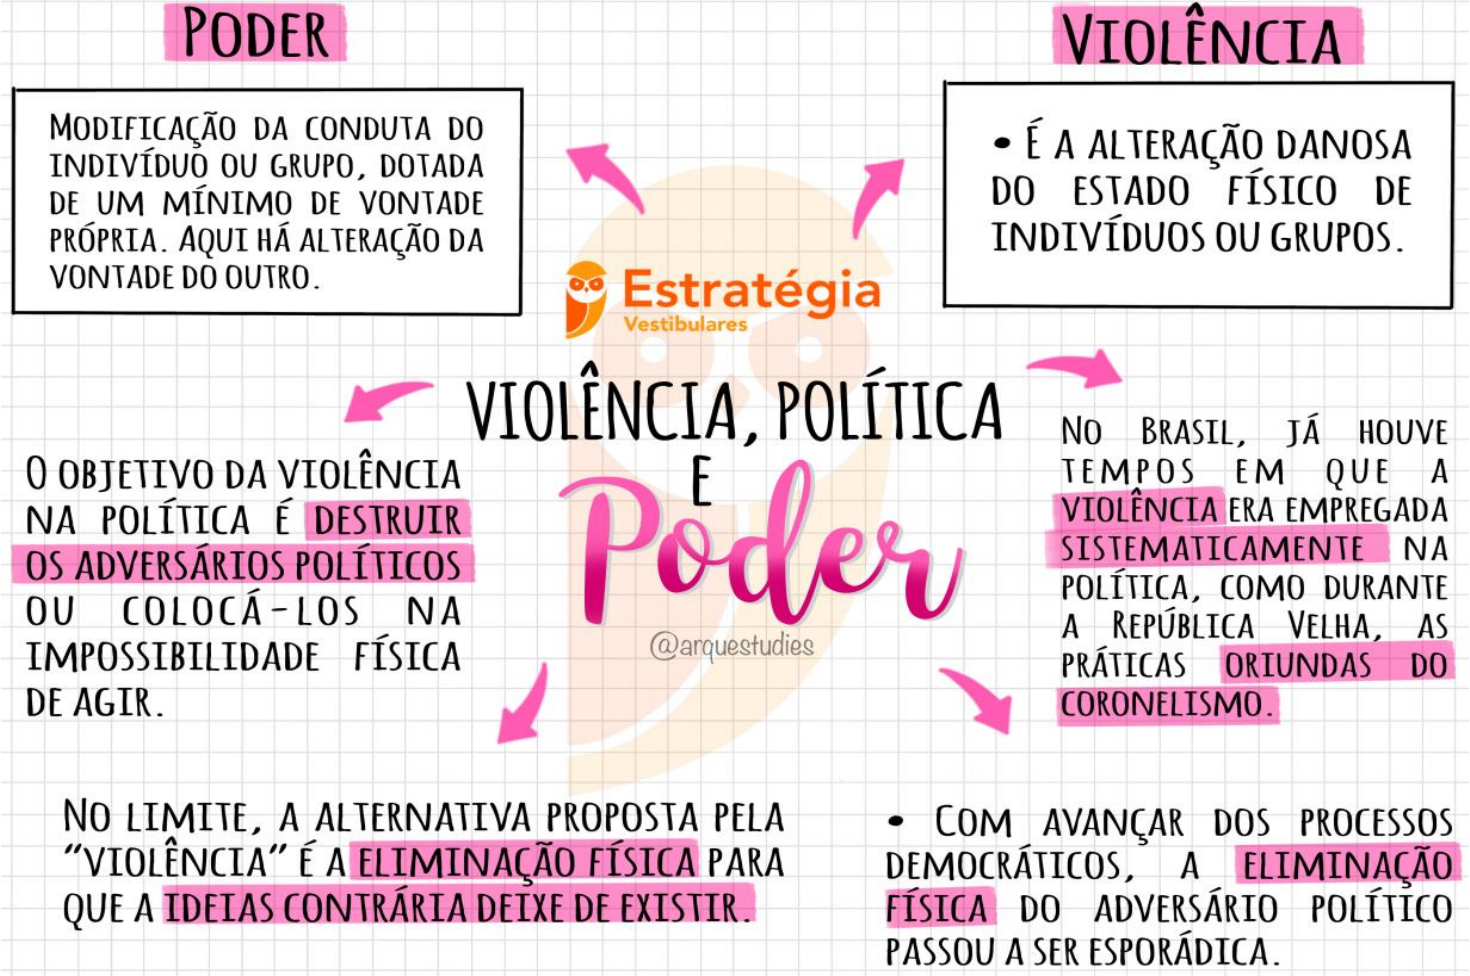 50 - VIOLÊNCIA, POLÍTICA E PODER (MAPA MENTAL) - Sociologia